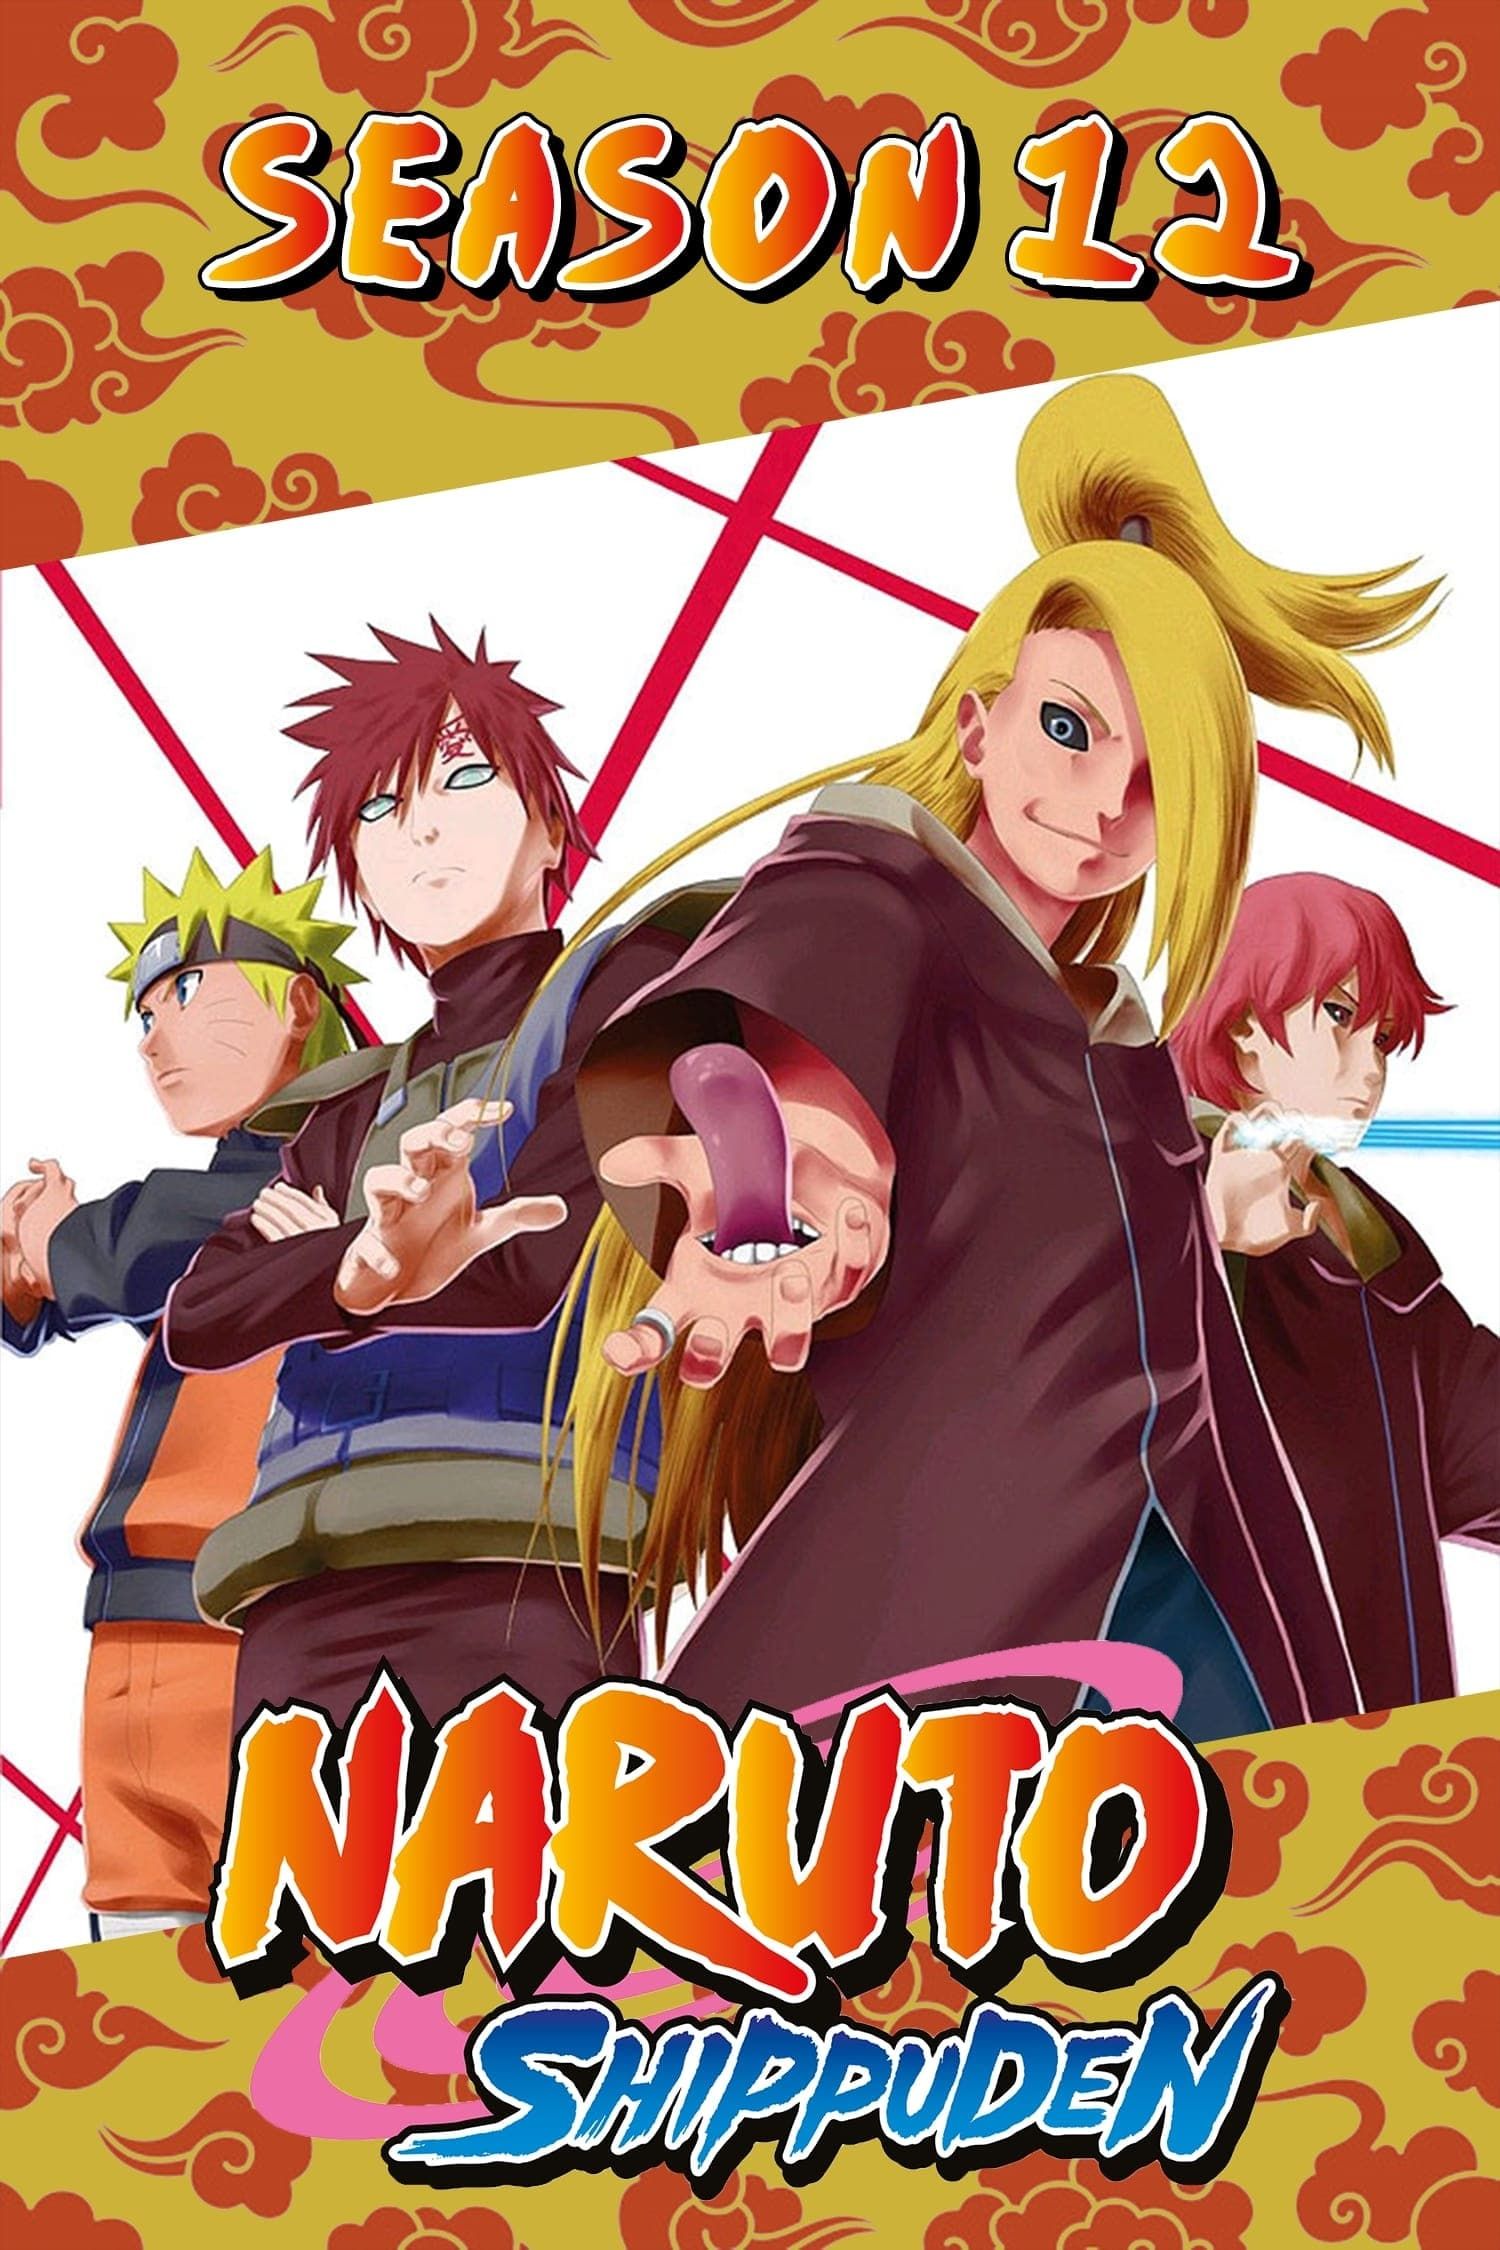 Naruto Online - NEW NINJA Hidan [Shadow of Evil] Full Gameplay